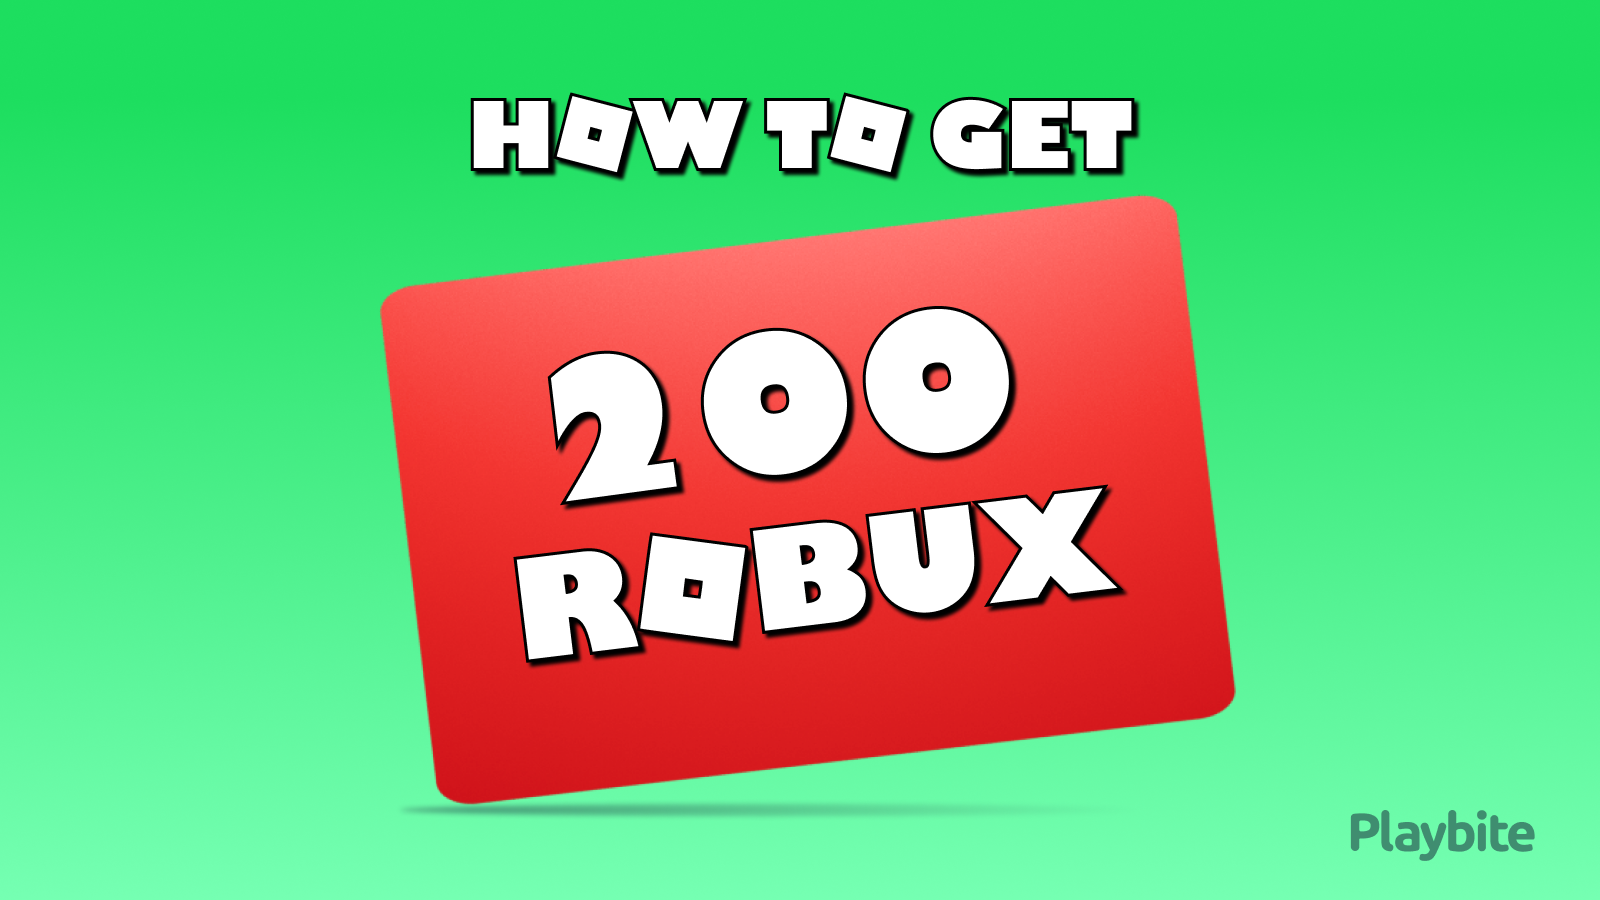 Buy 200 Robux online